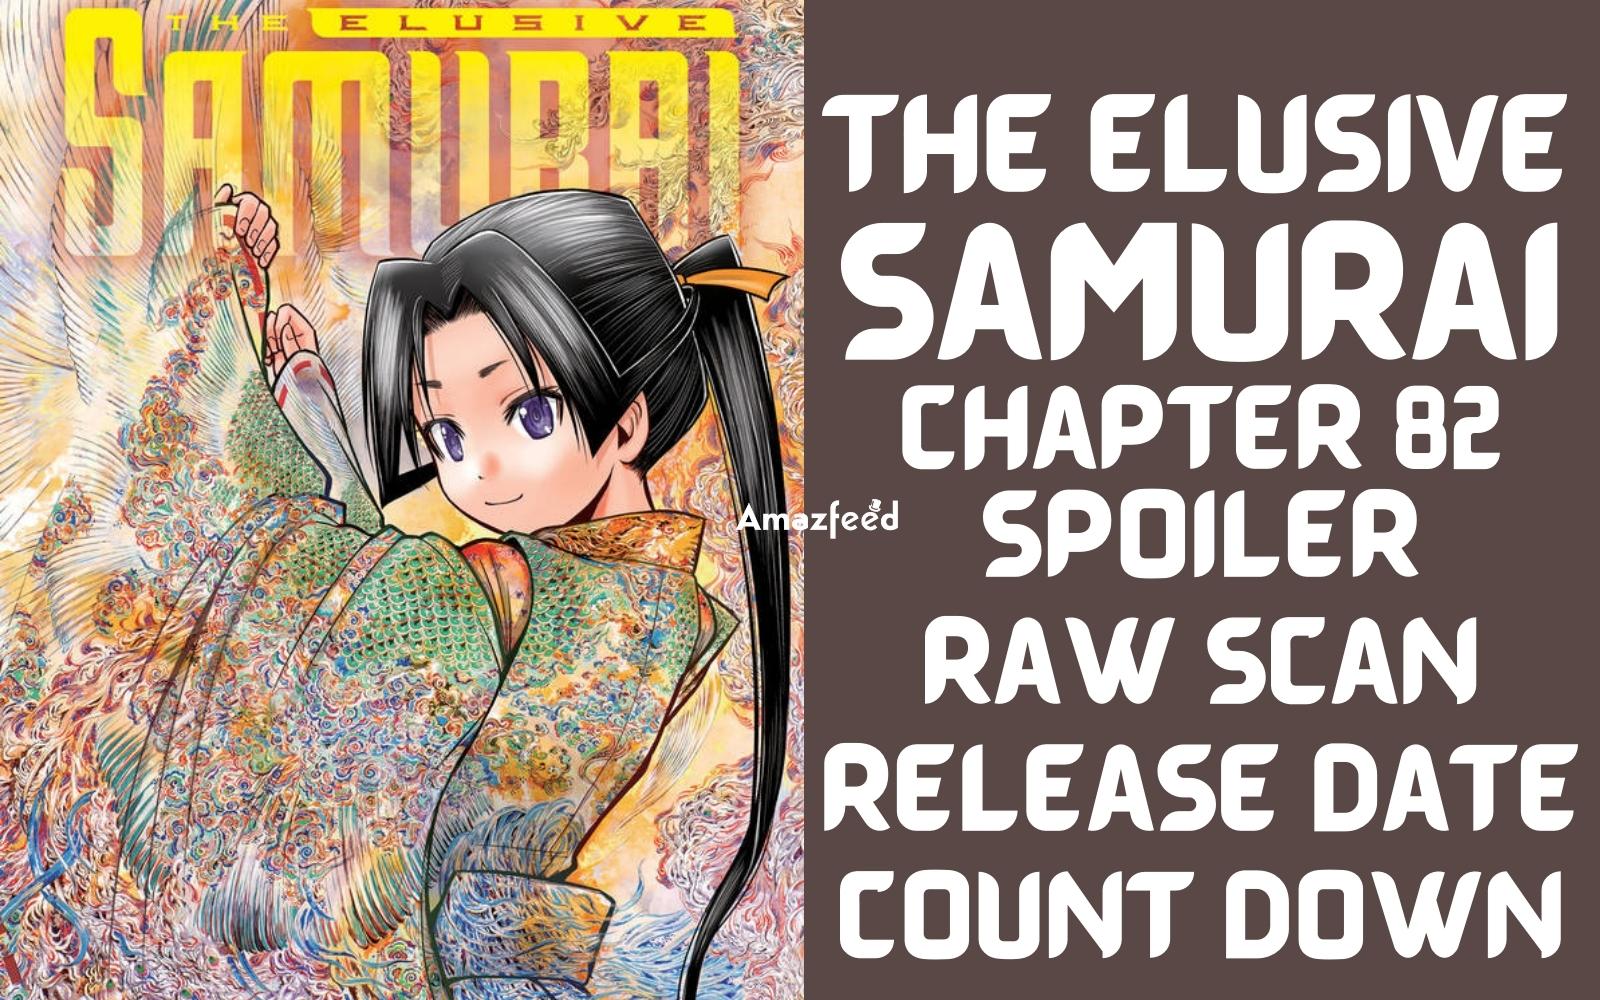 The Elusive Samurai Chapter 82 Spoiler, Release Date, Raw Scan, CountDown